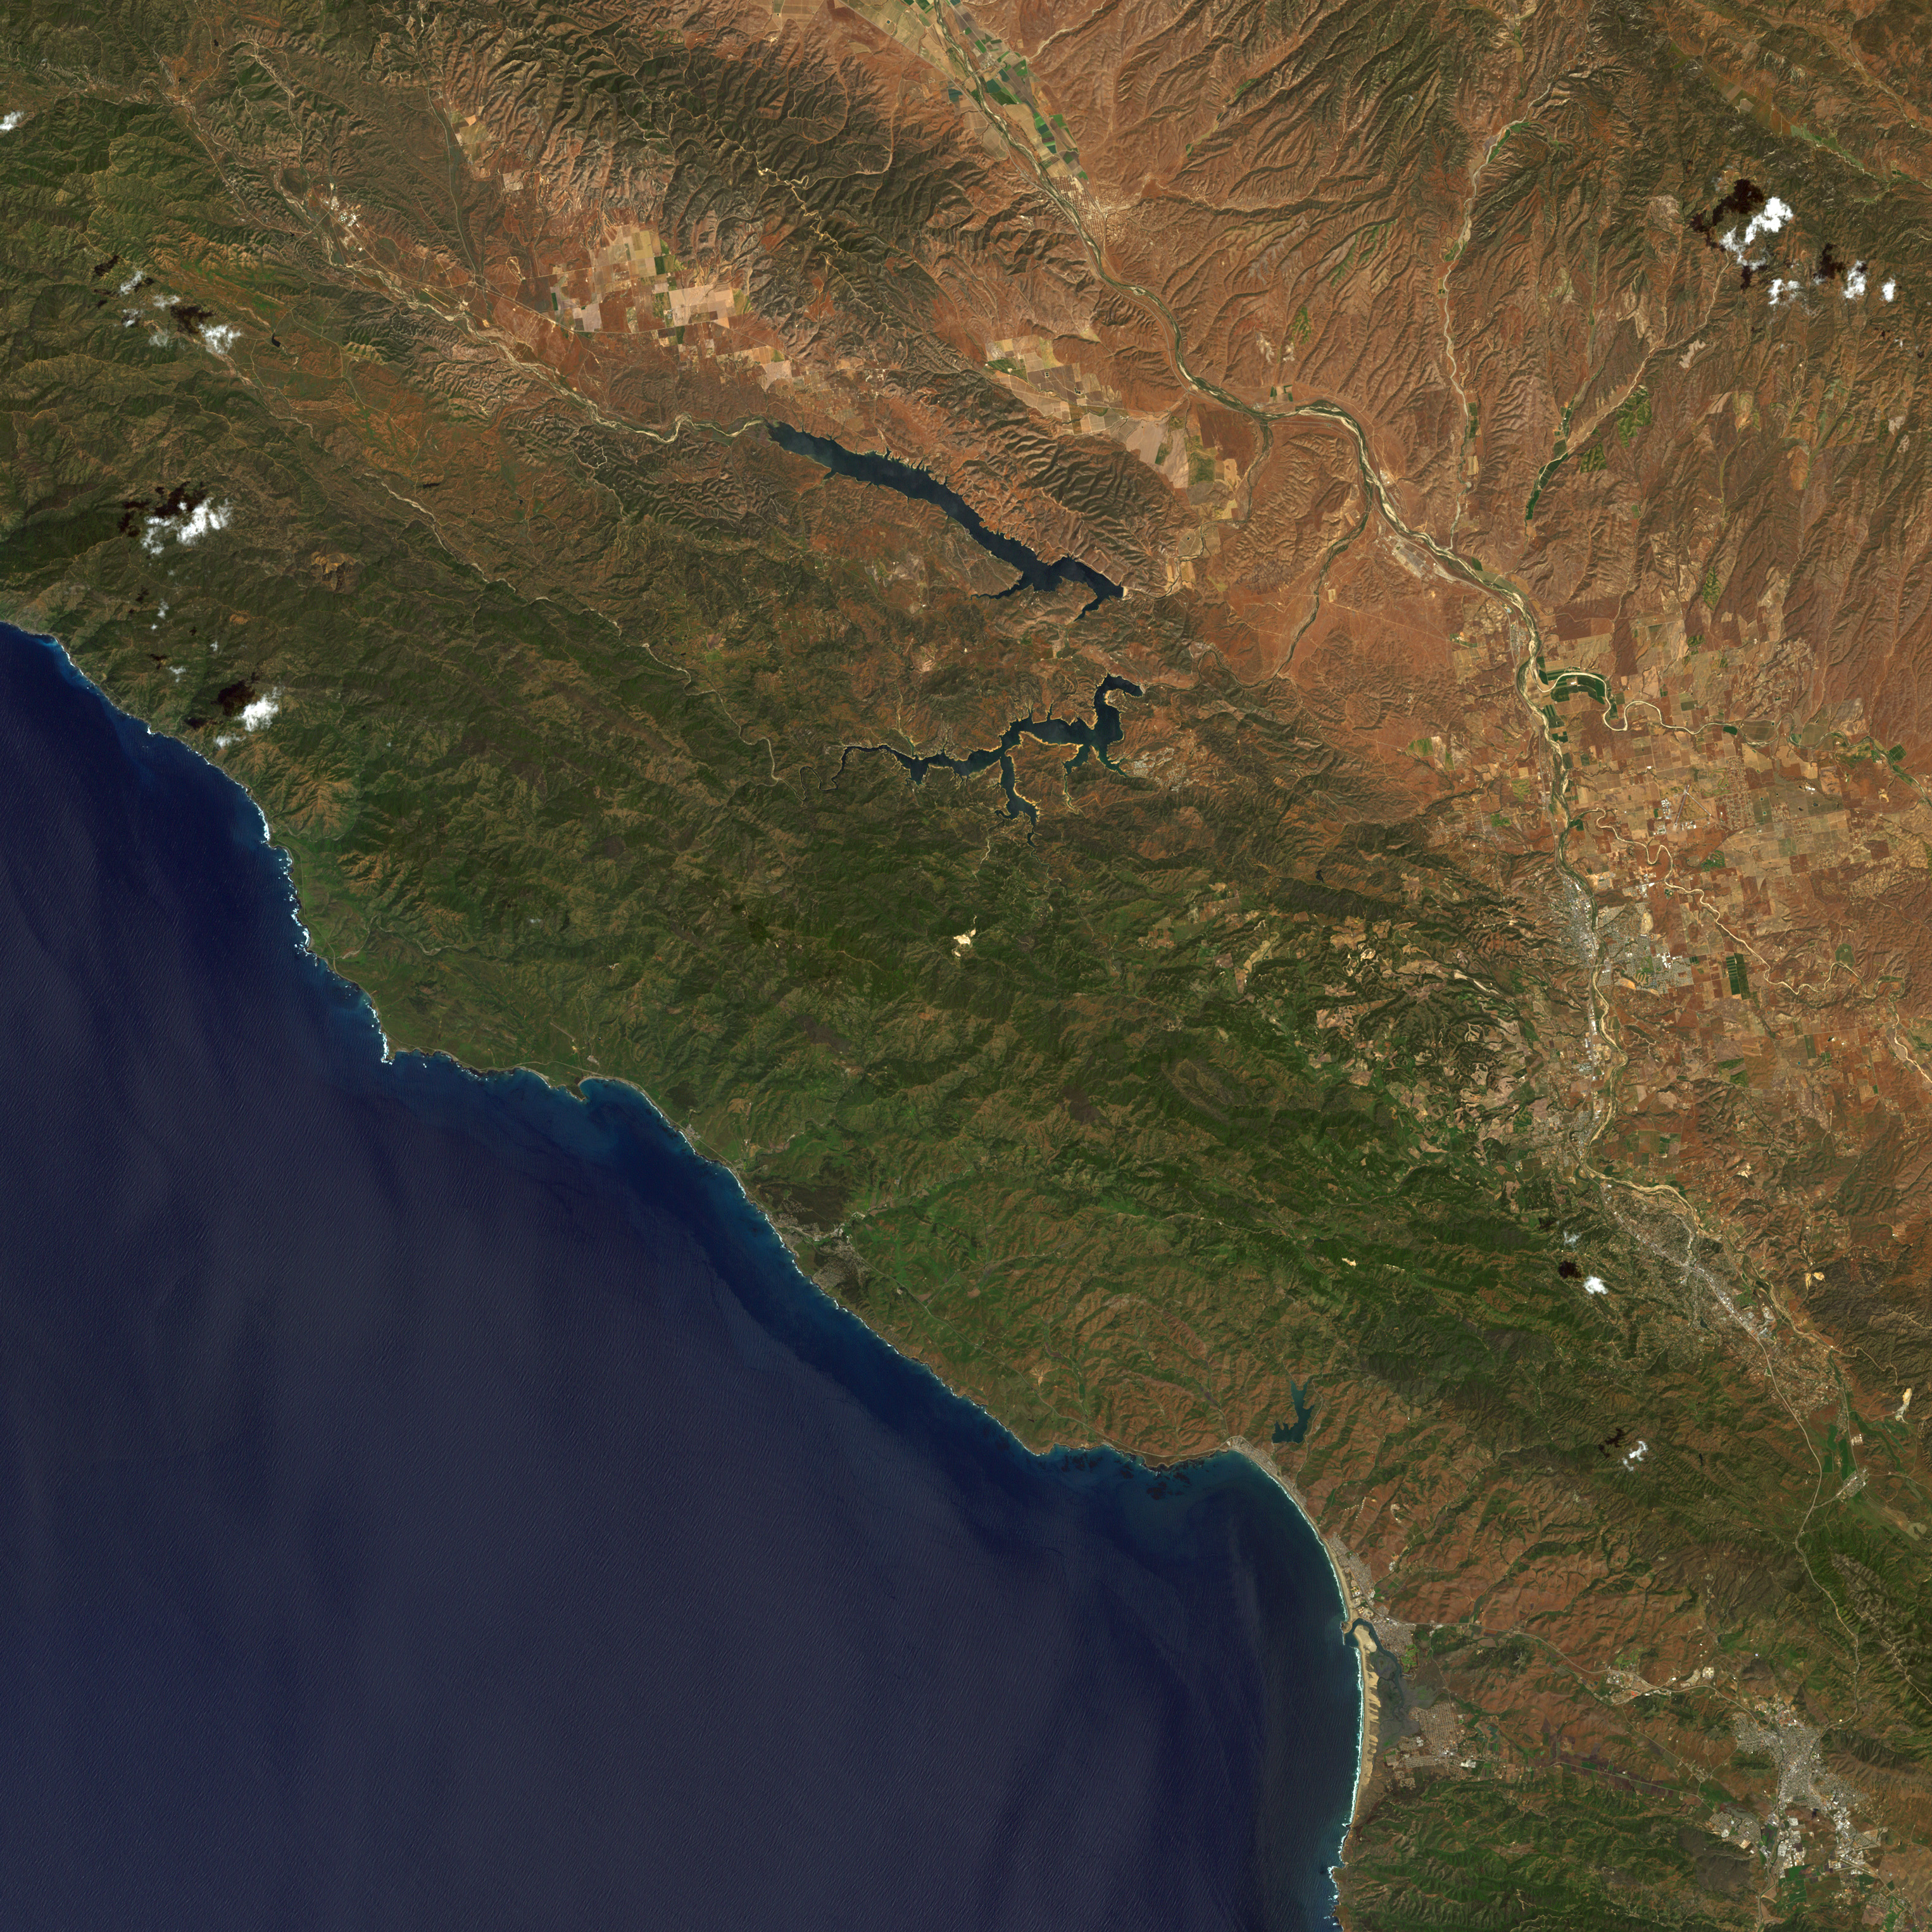 Earthquake near San Simeon, California - related image preview